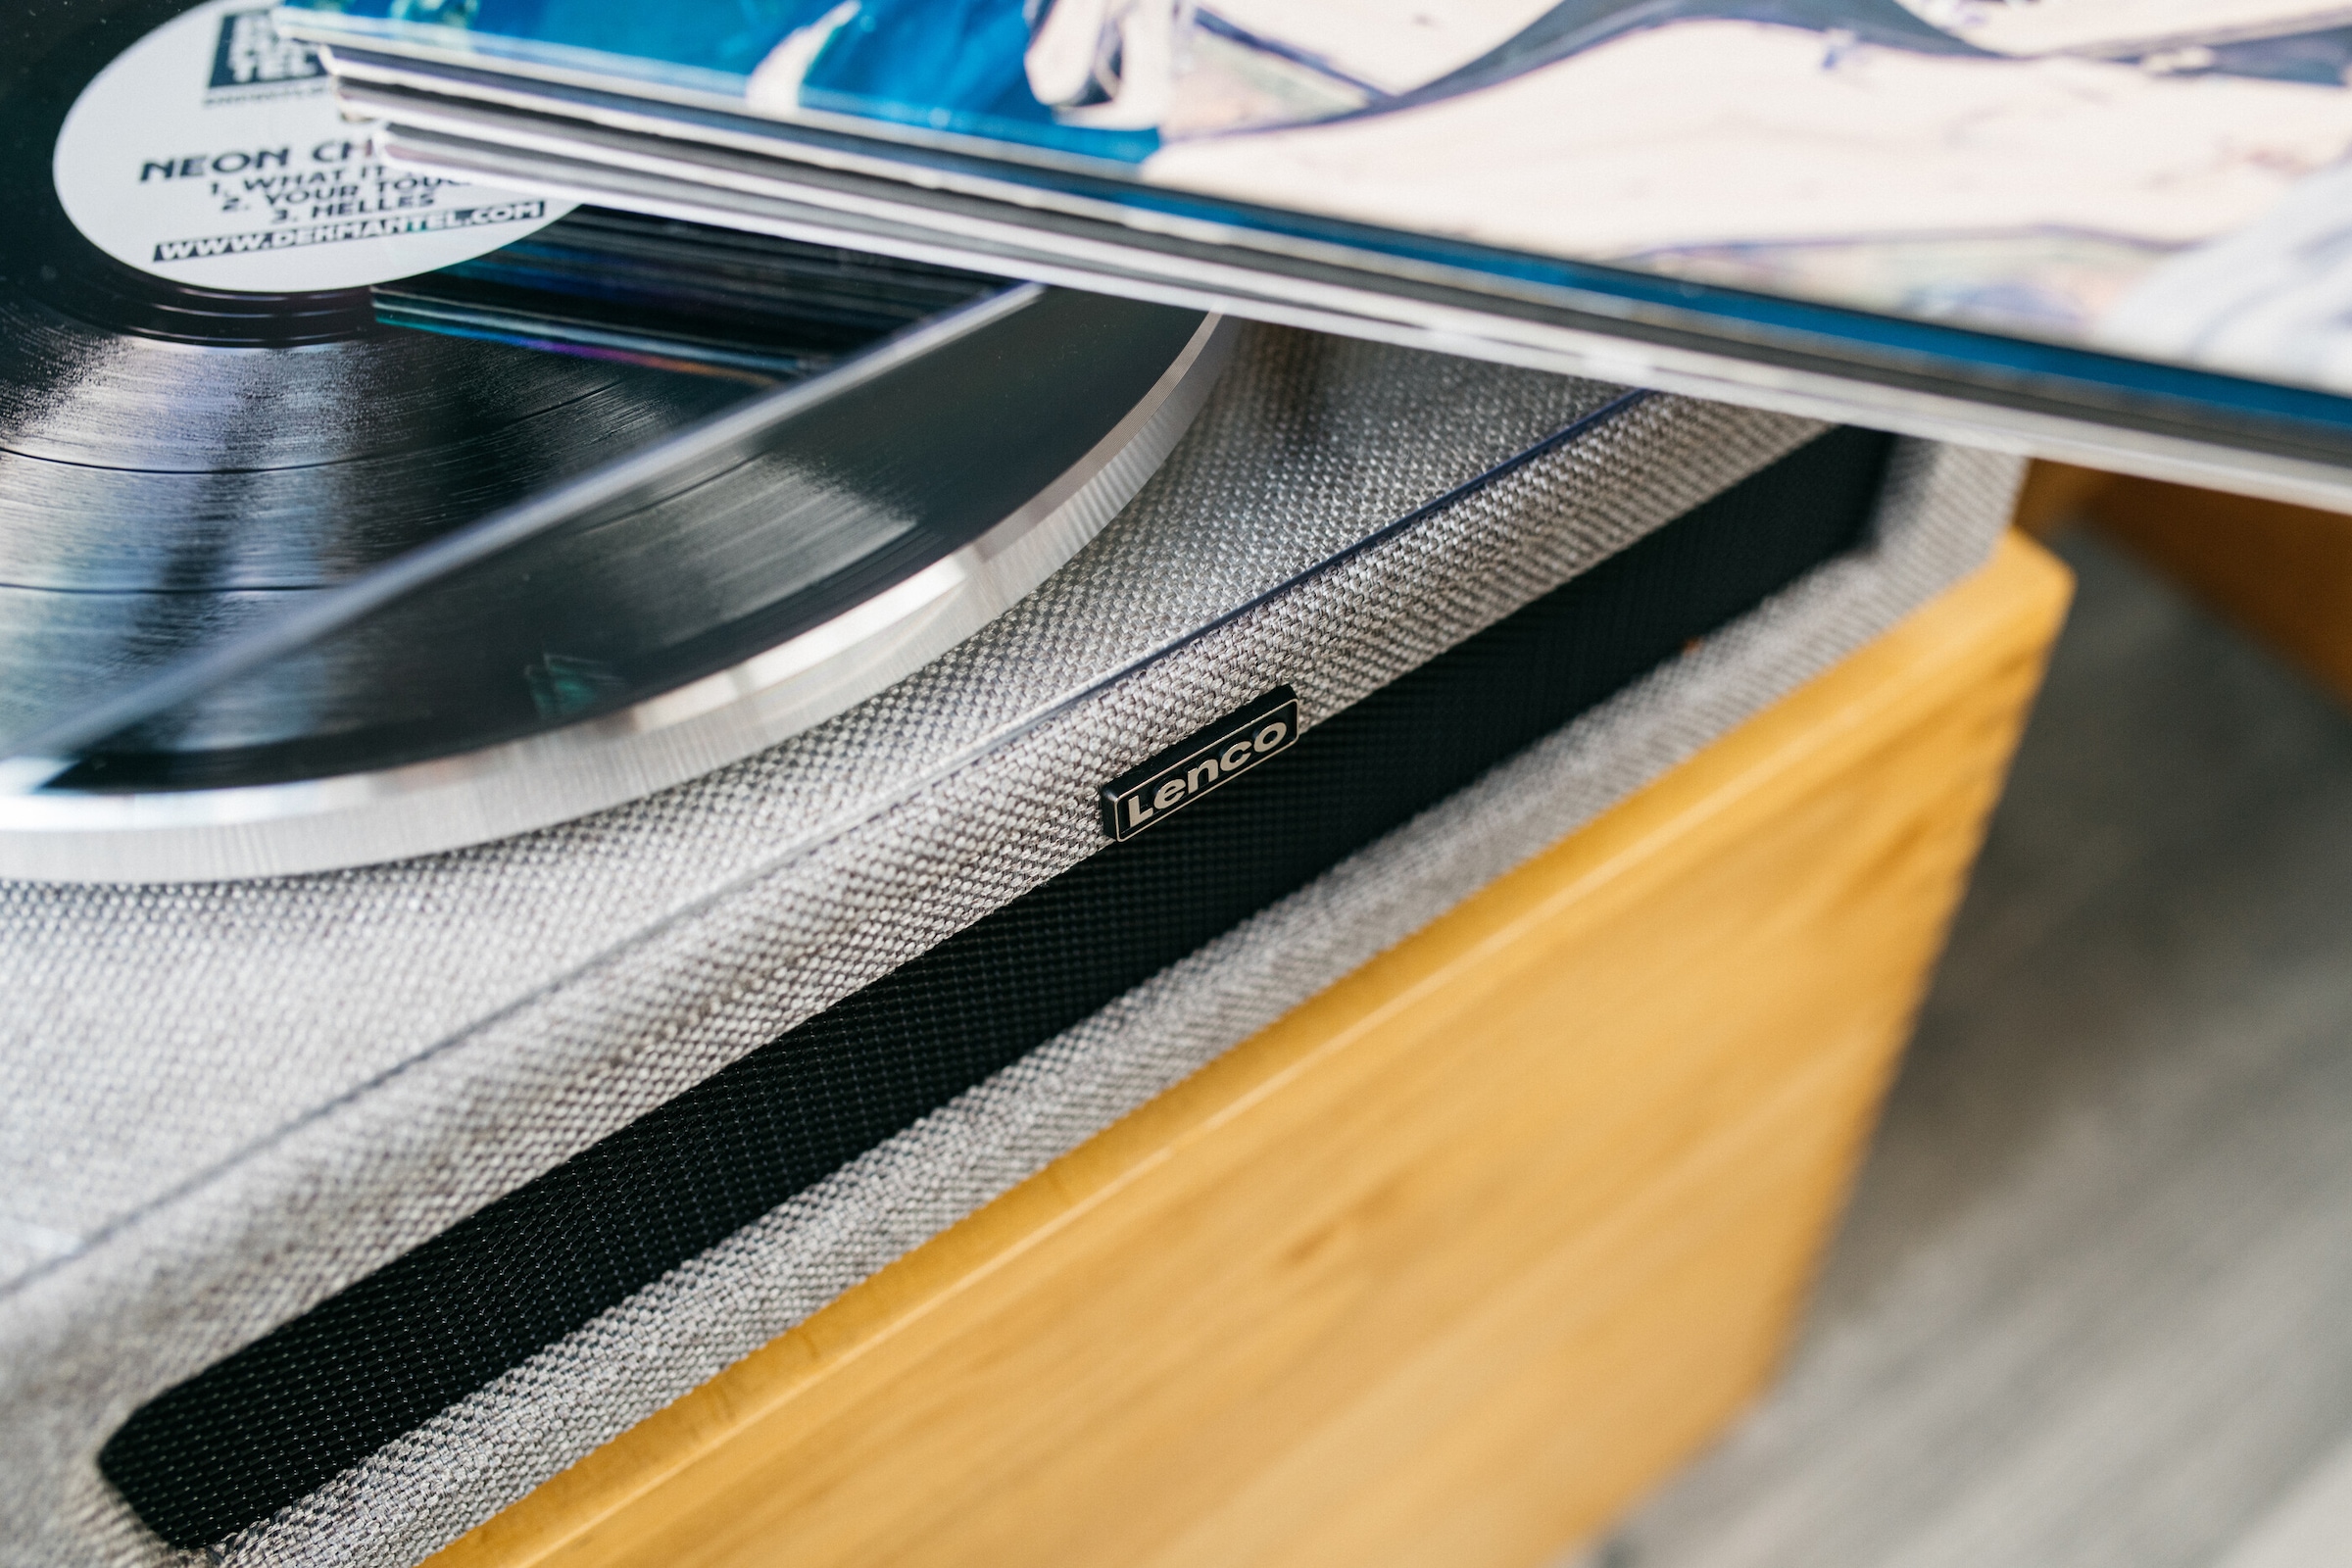 Lenco Plattenspieler »LS-440 grau/anthrazit«, Lautsprecher integriert,  Bluetooth ➥ 3 Jahre XXL Garantie | UNIVERSAL